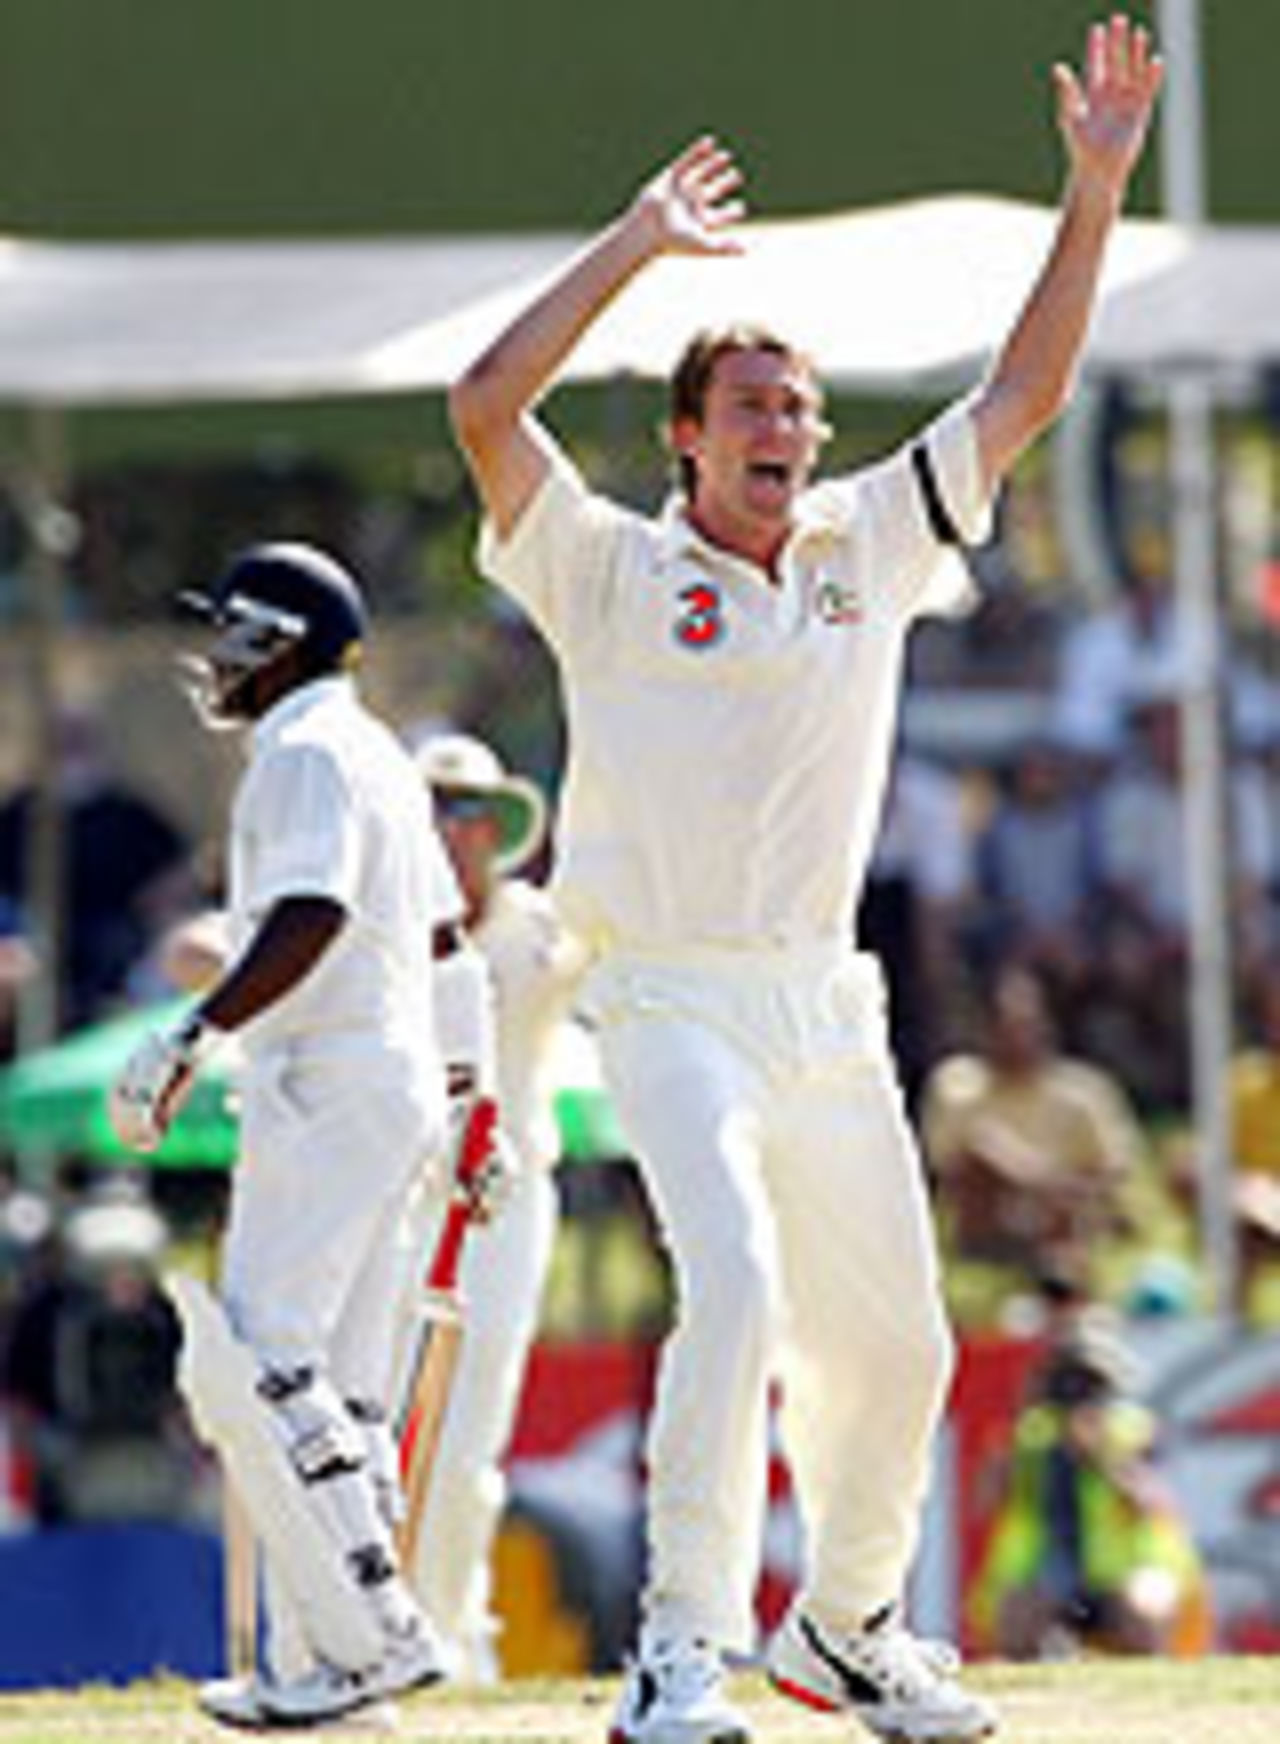 Glenn McGrath nabs Sanath Jayasuriya, Australia v Sri Lanka, Darwin, July 3, 2004